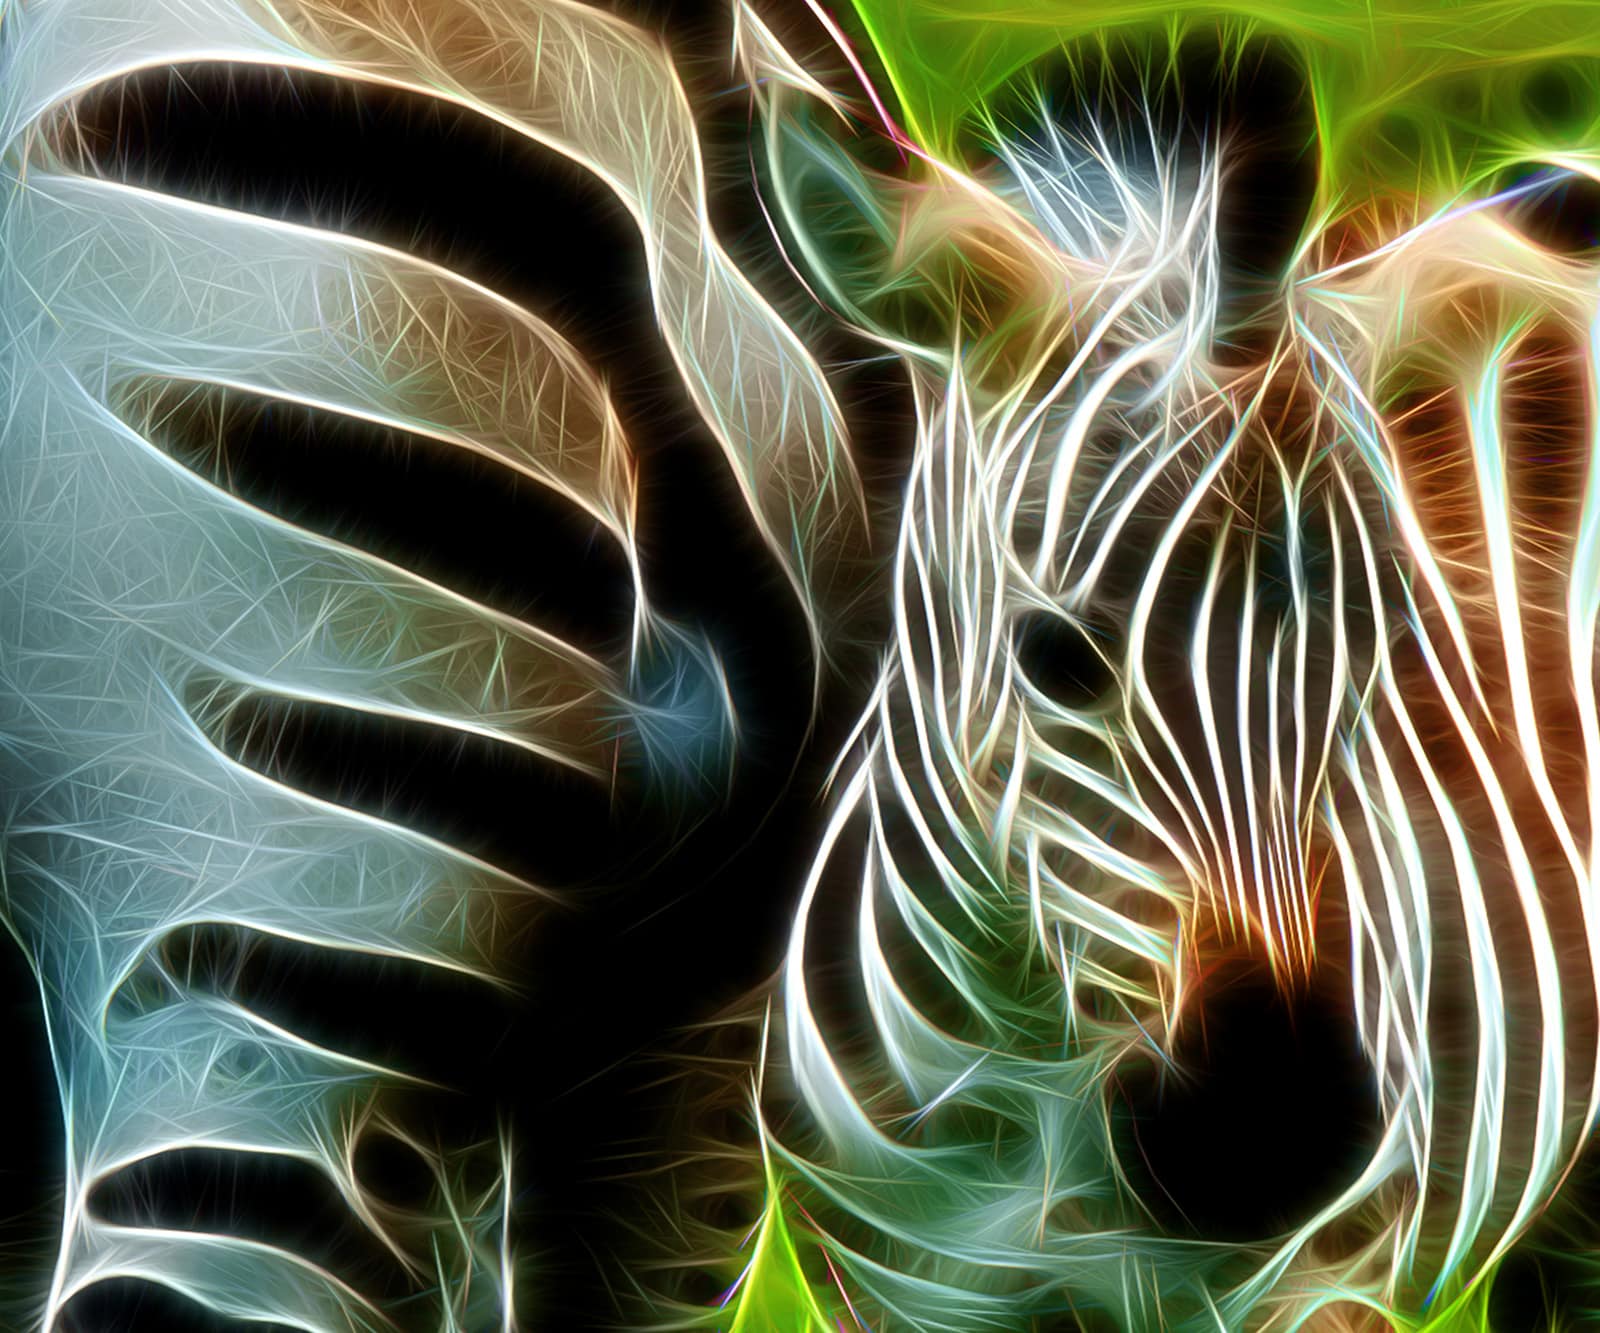 "Baby Zebra" Sublimation With Acrylic Overlay by Howard Harris